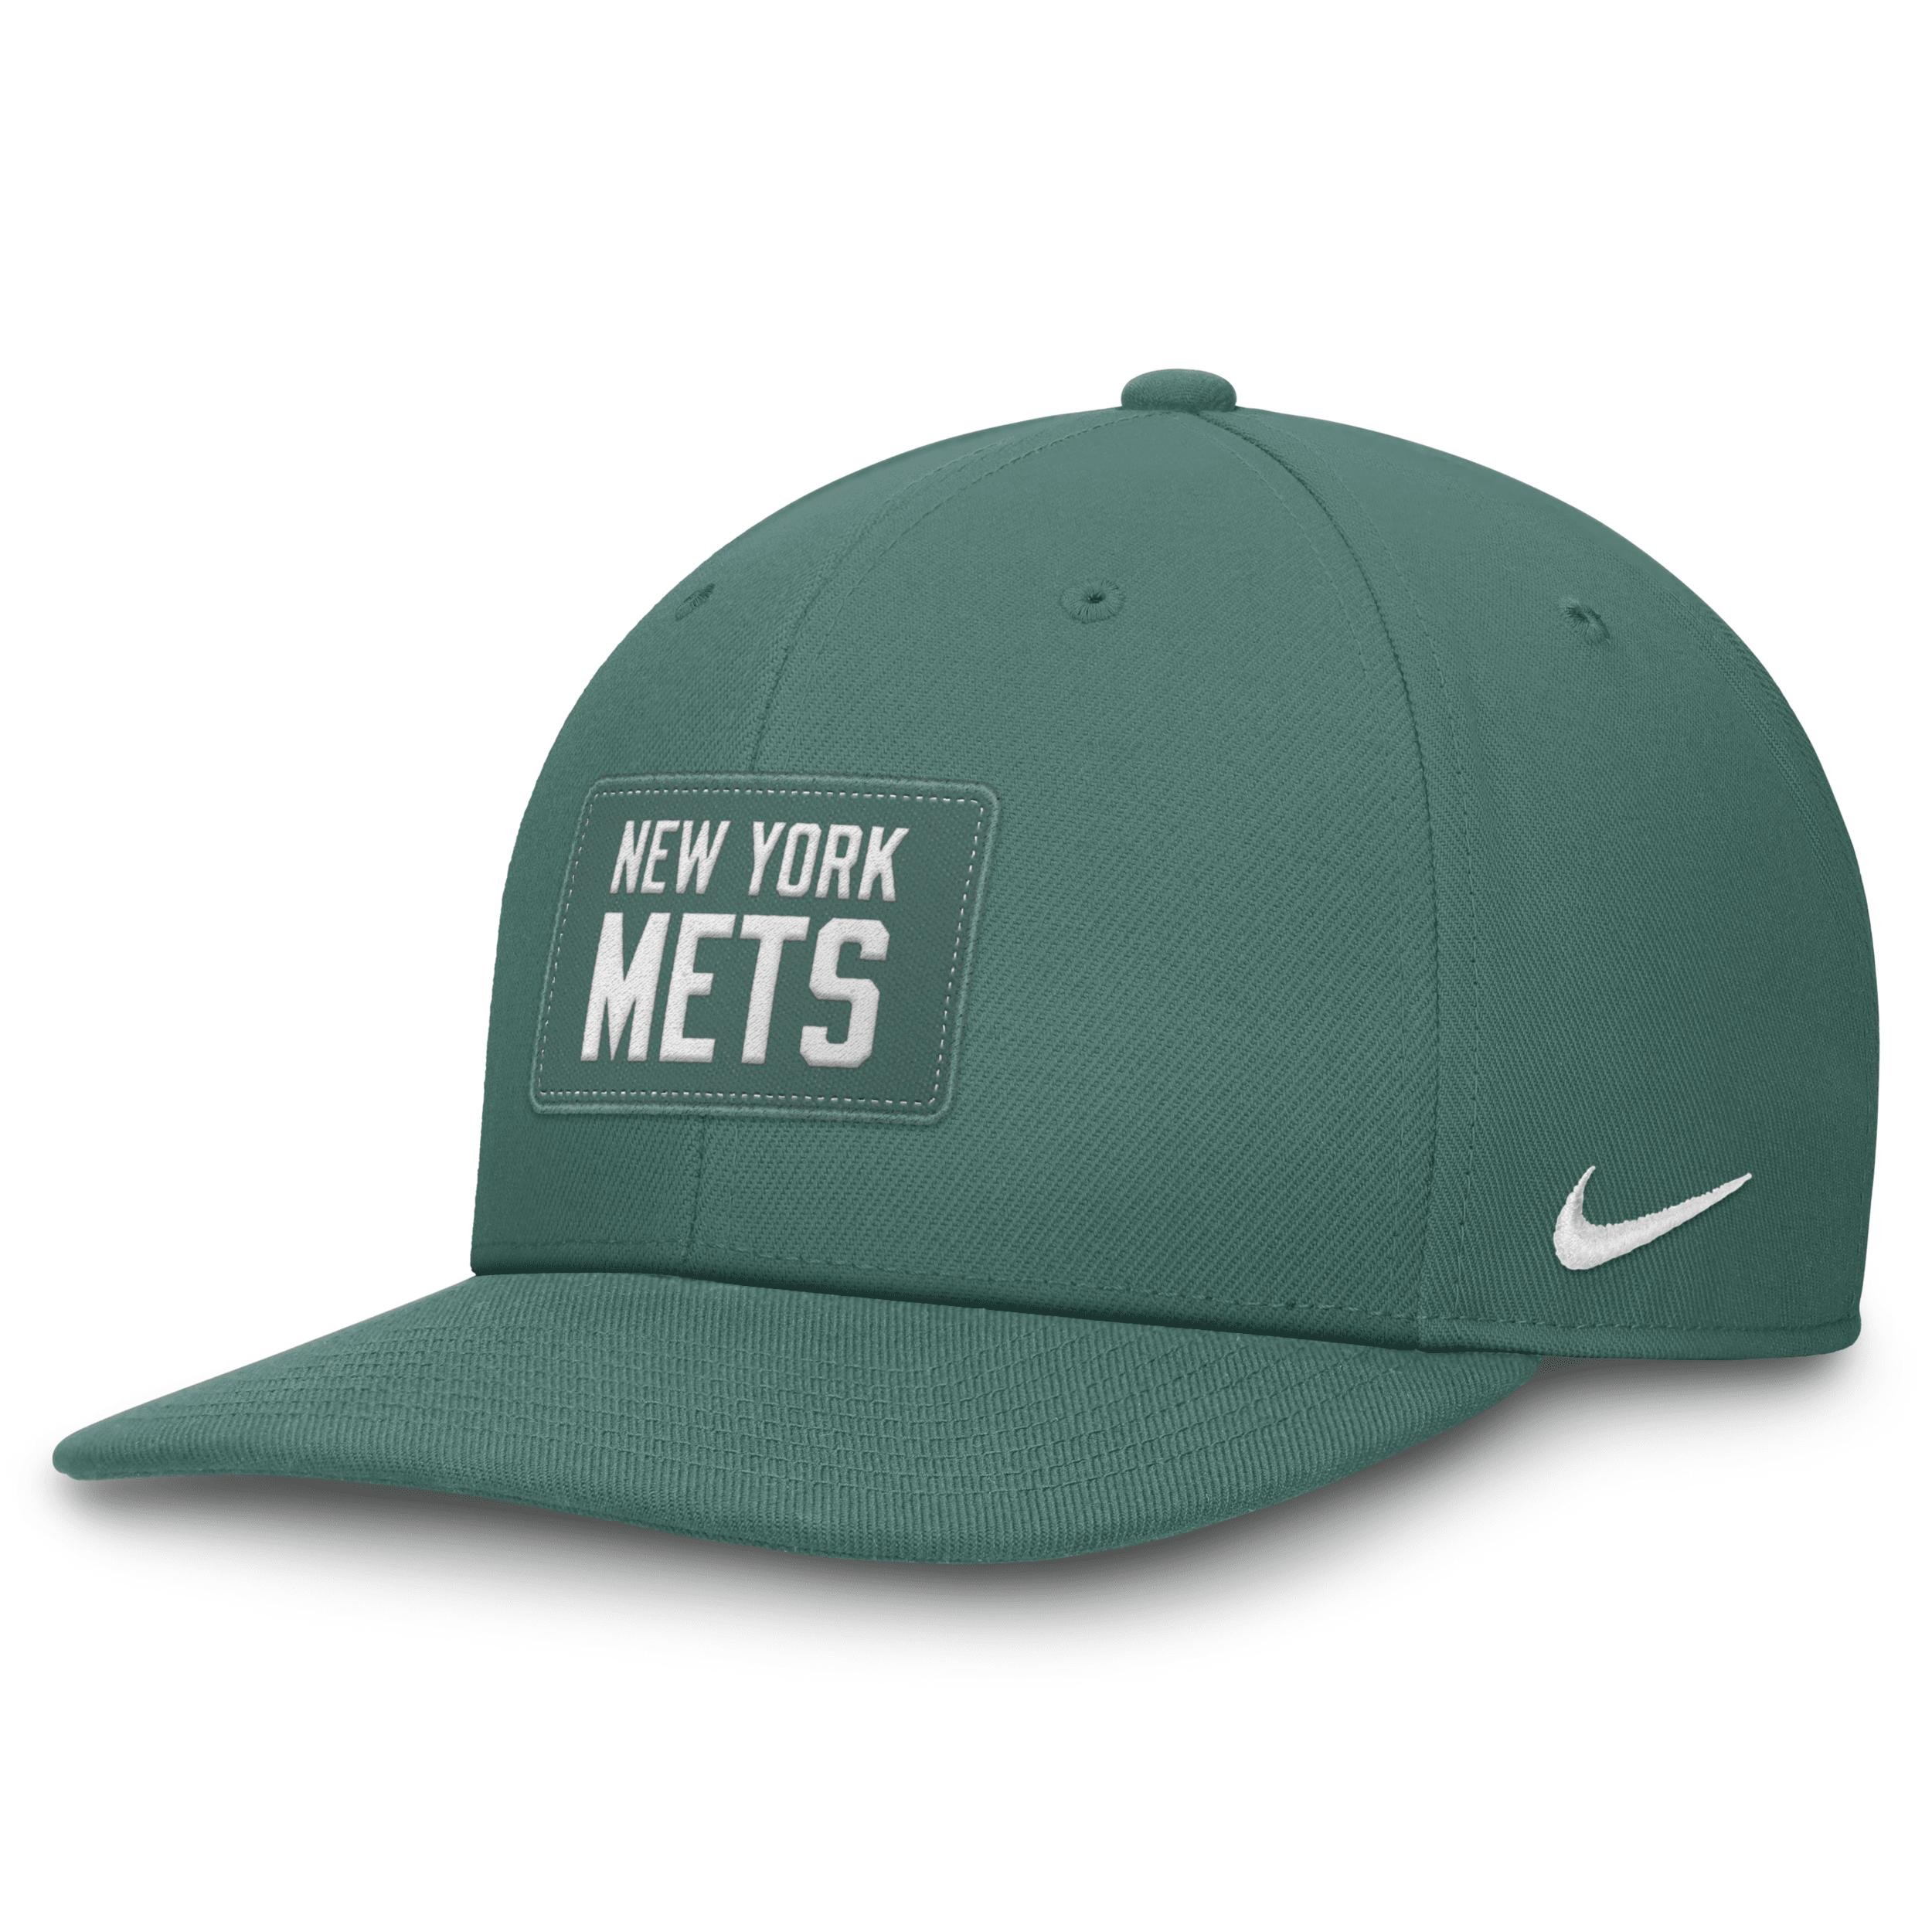 New York Mets Bicoastal Pro Nike Unisex Dri-FIT MLB Adjustable Hat by NIKE